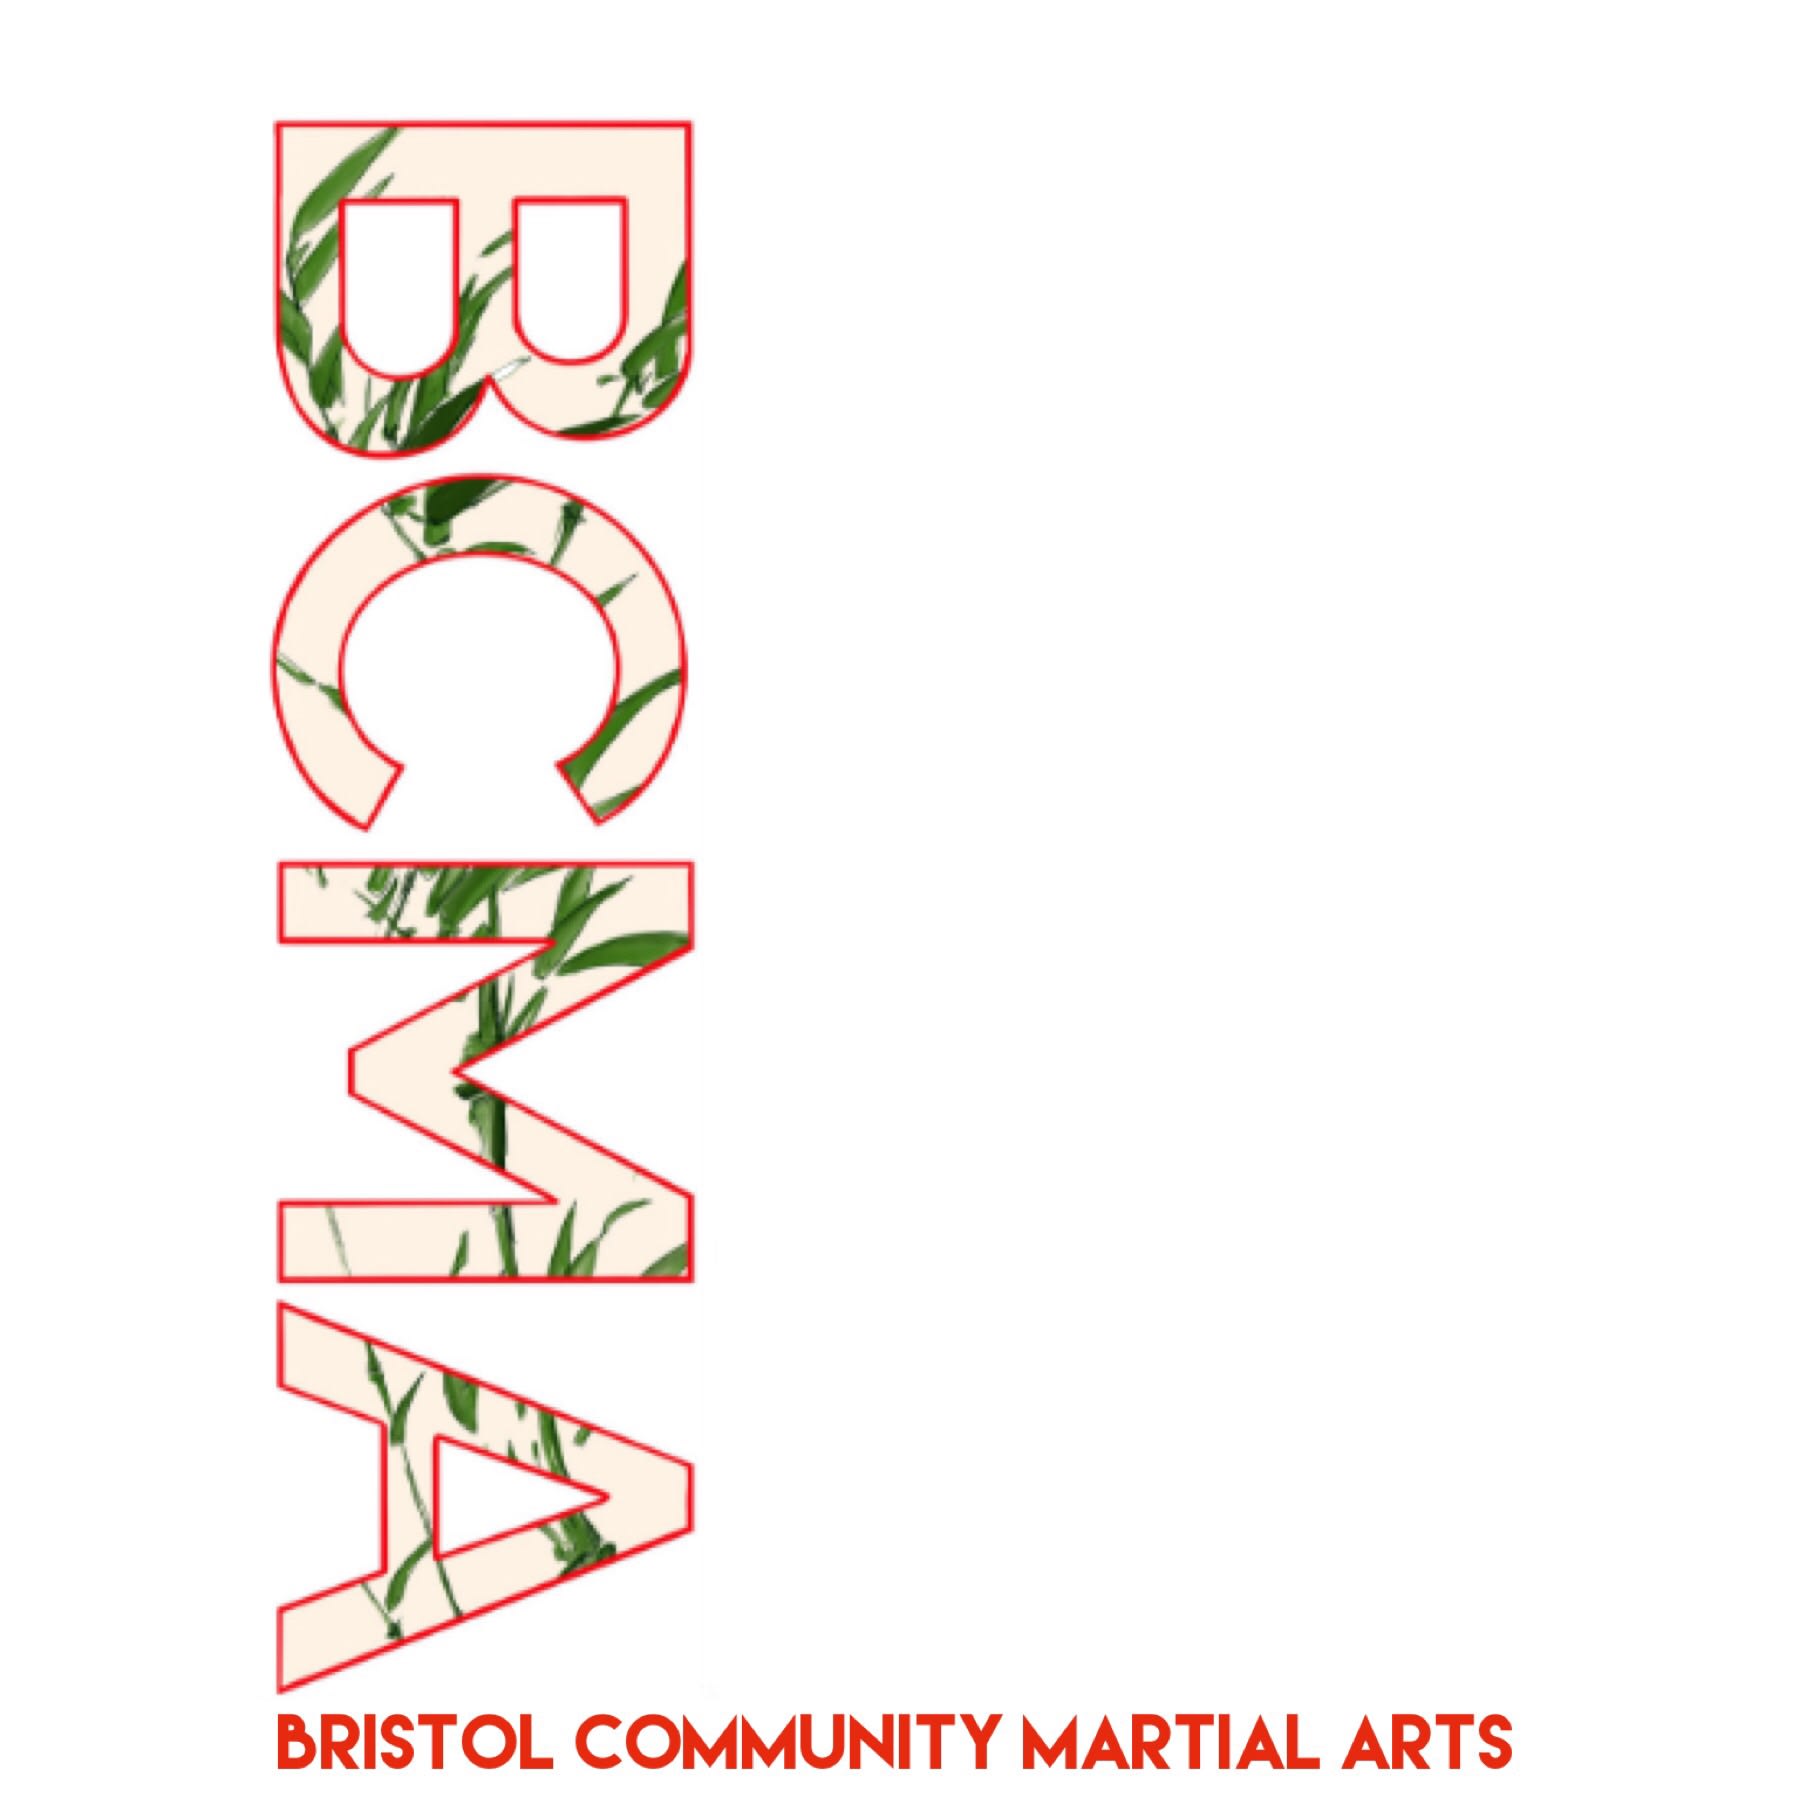 Bristol Community Martial Arts